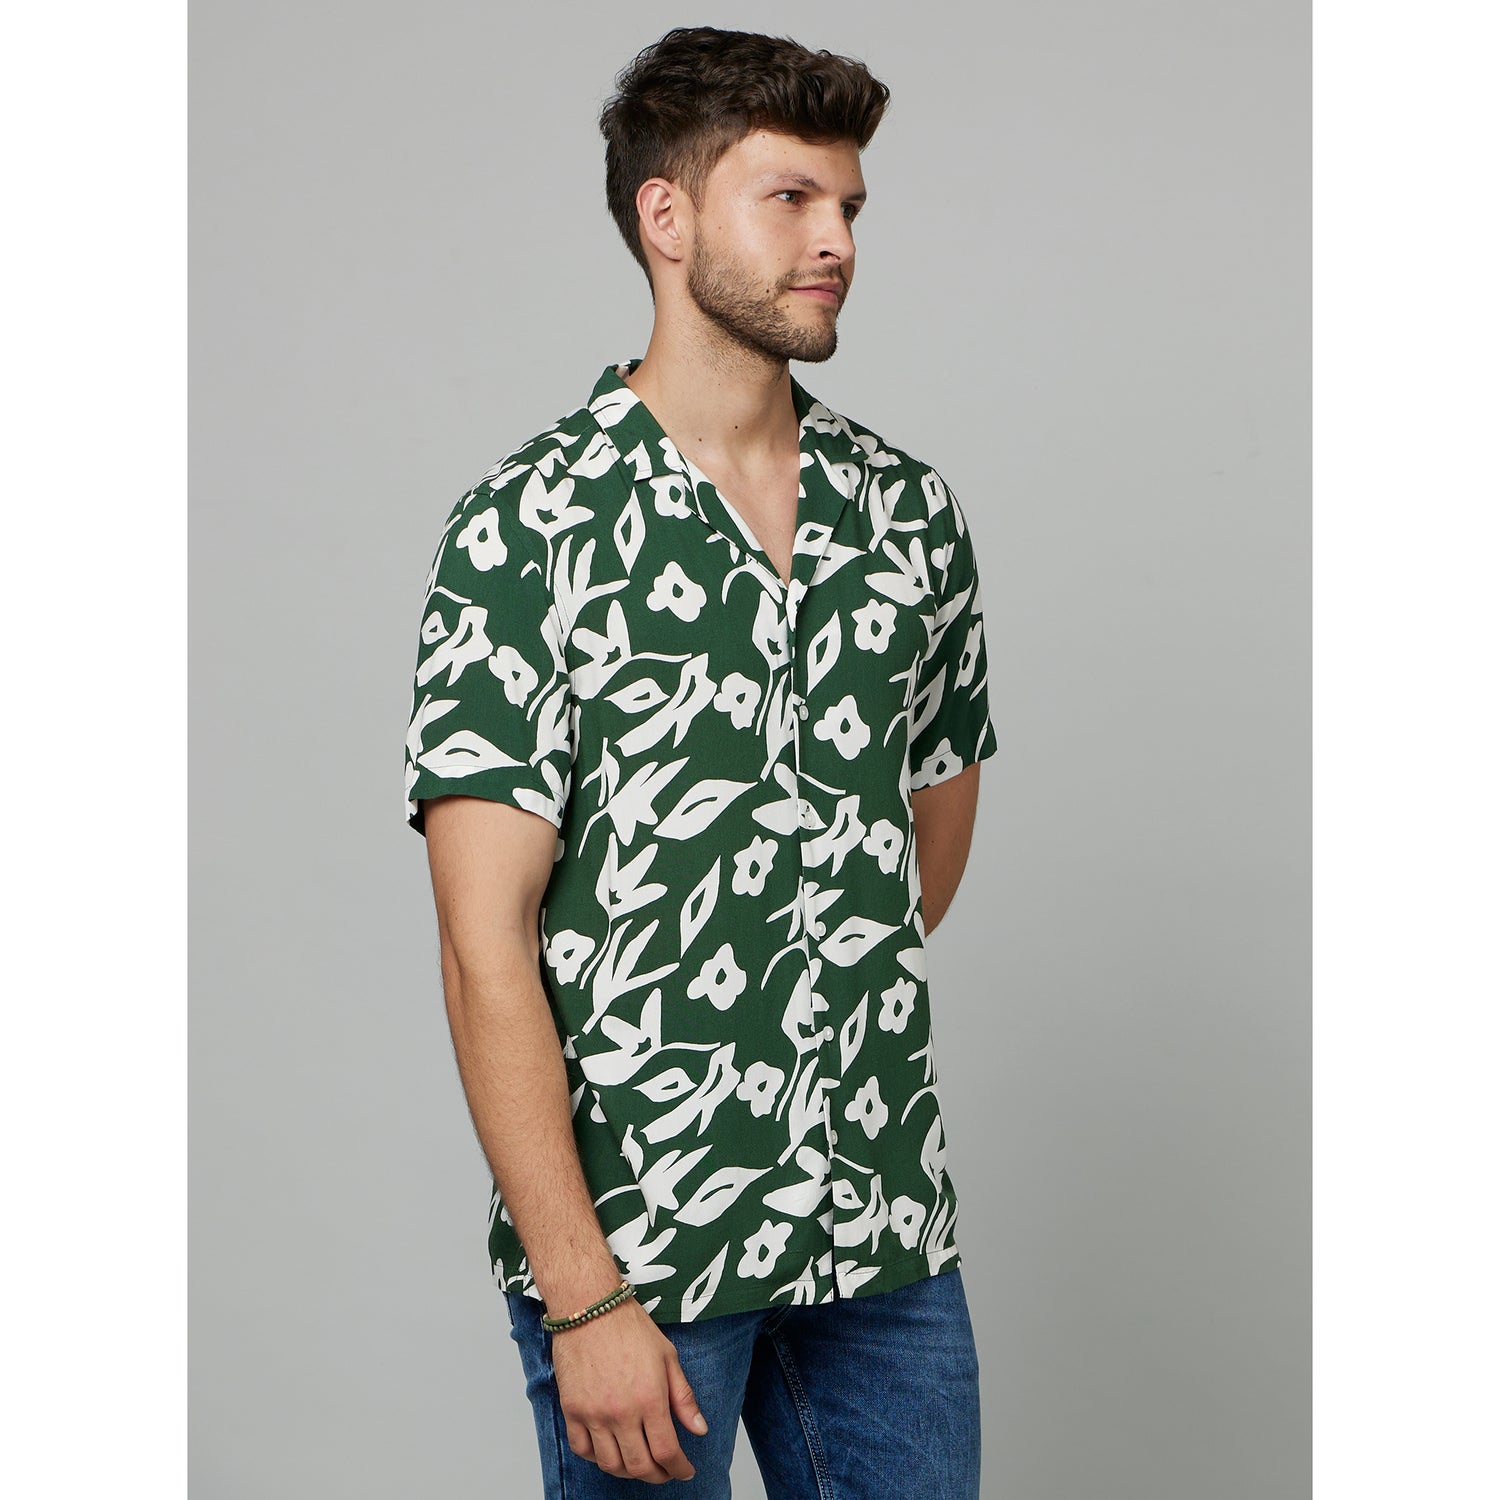 Green Classic Floral Printed Cotton Casual Shirt (FAVISFLO1)